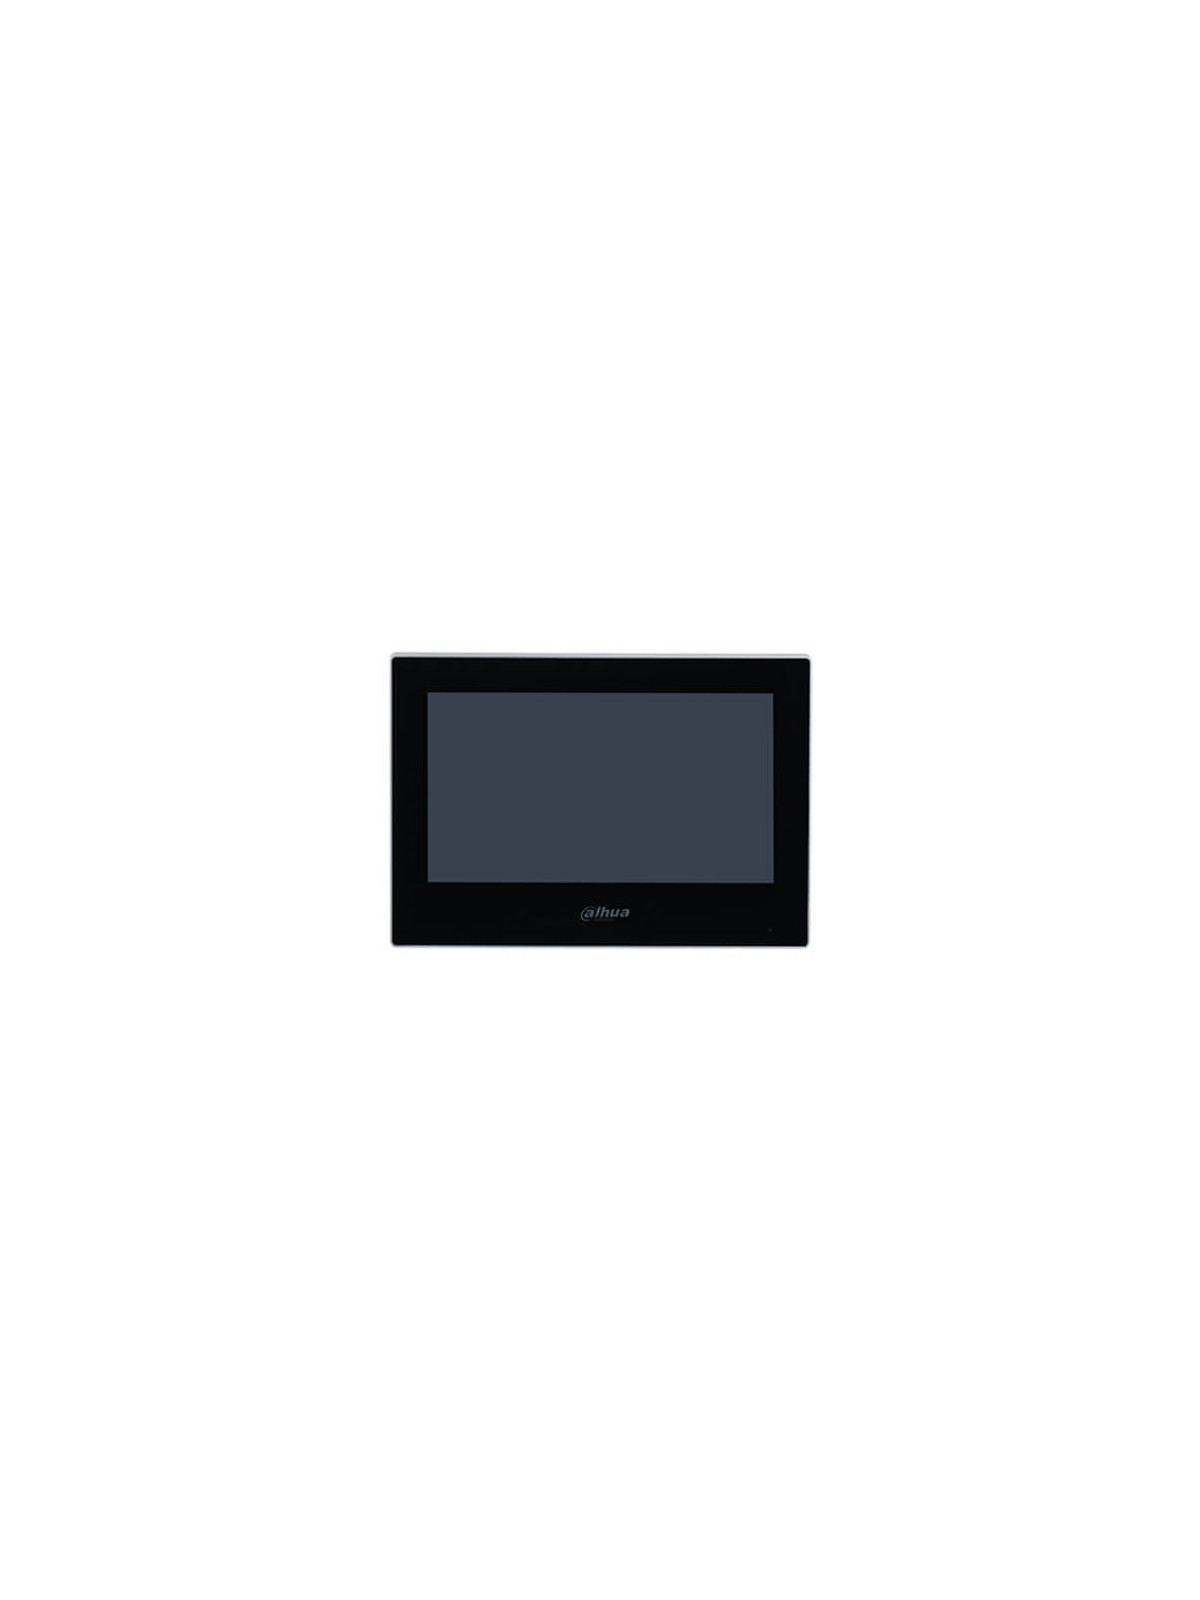 Monitor videoportero IP Dahua  VTH2621G-P 7" (1024x600) POE SD Alarmas